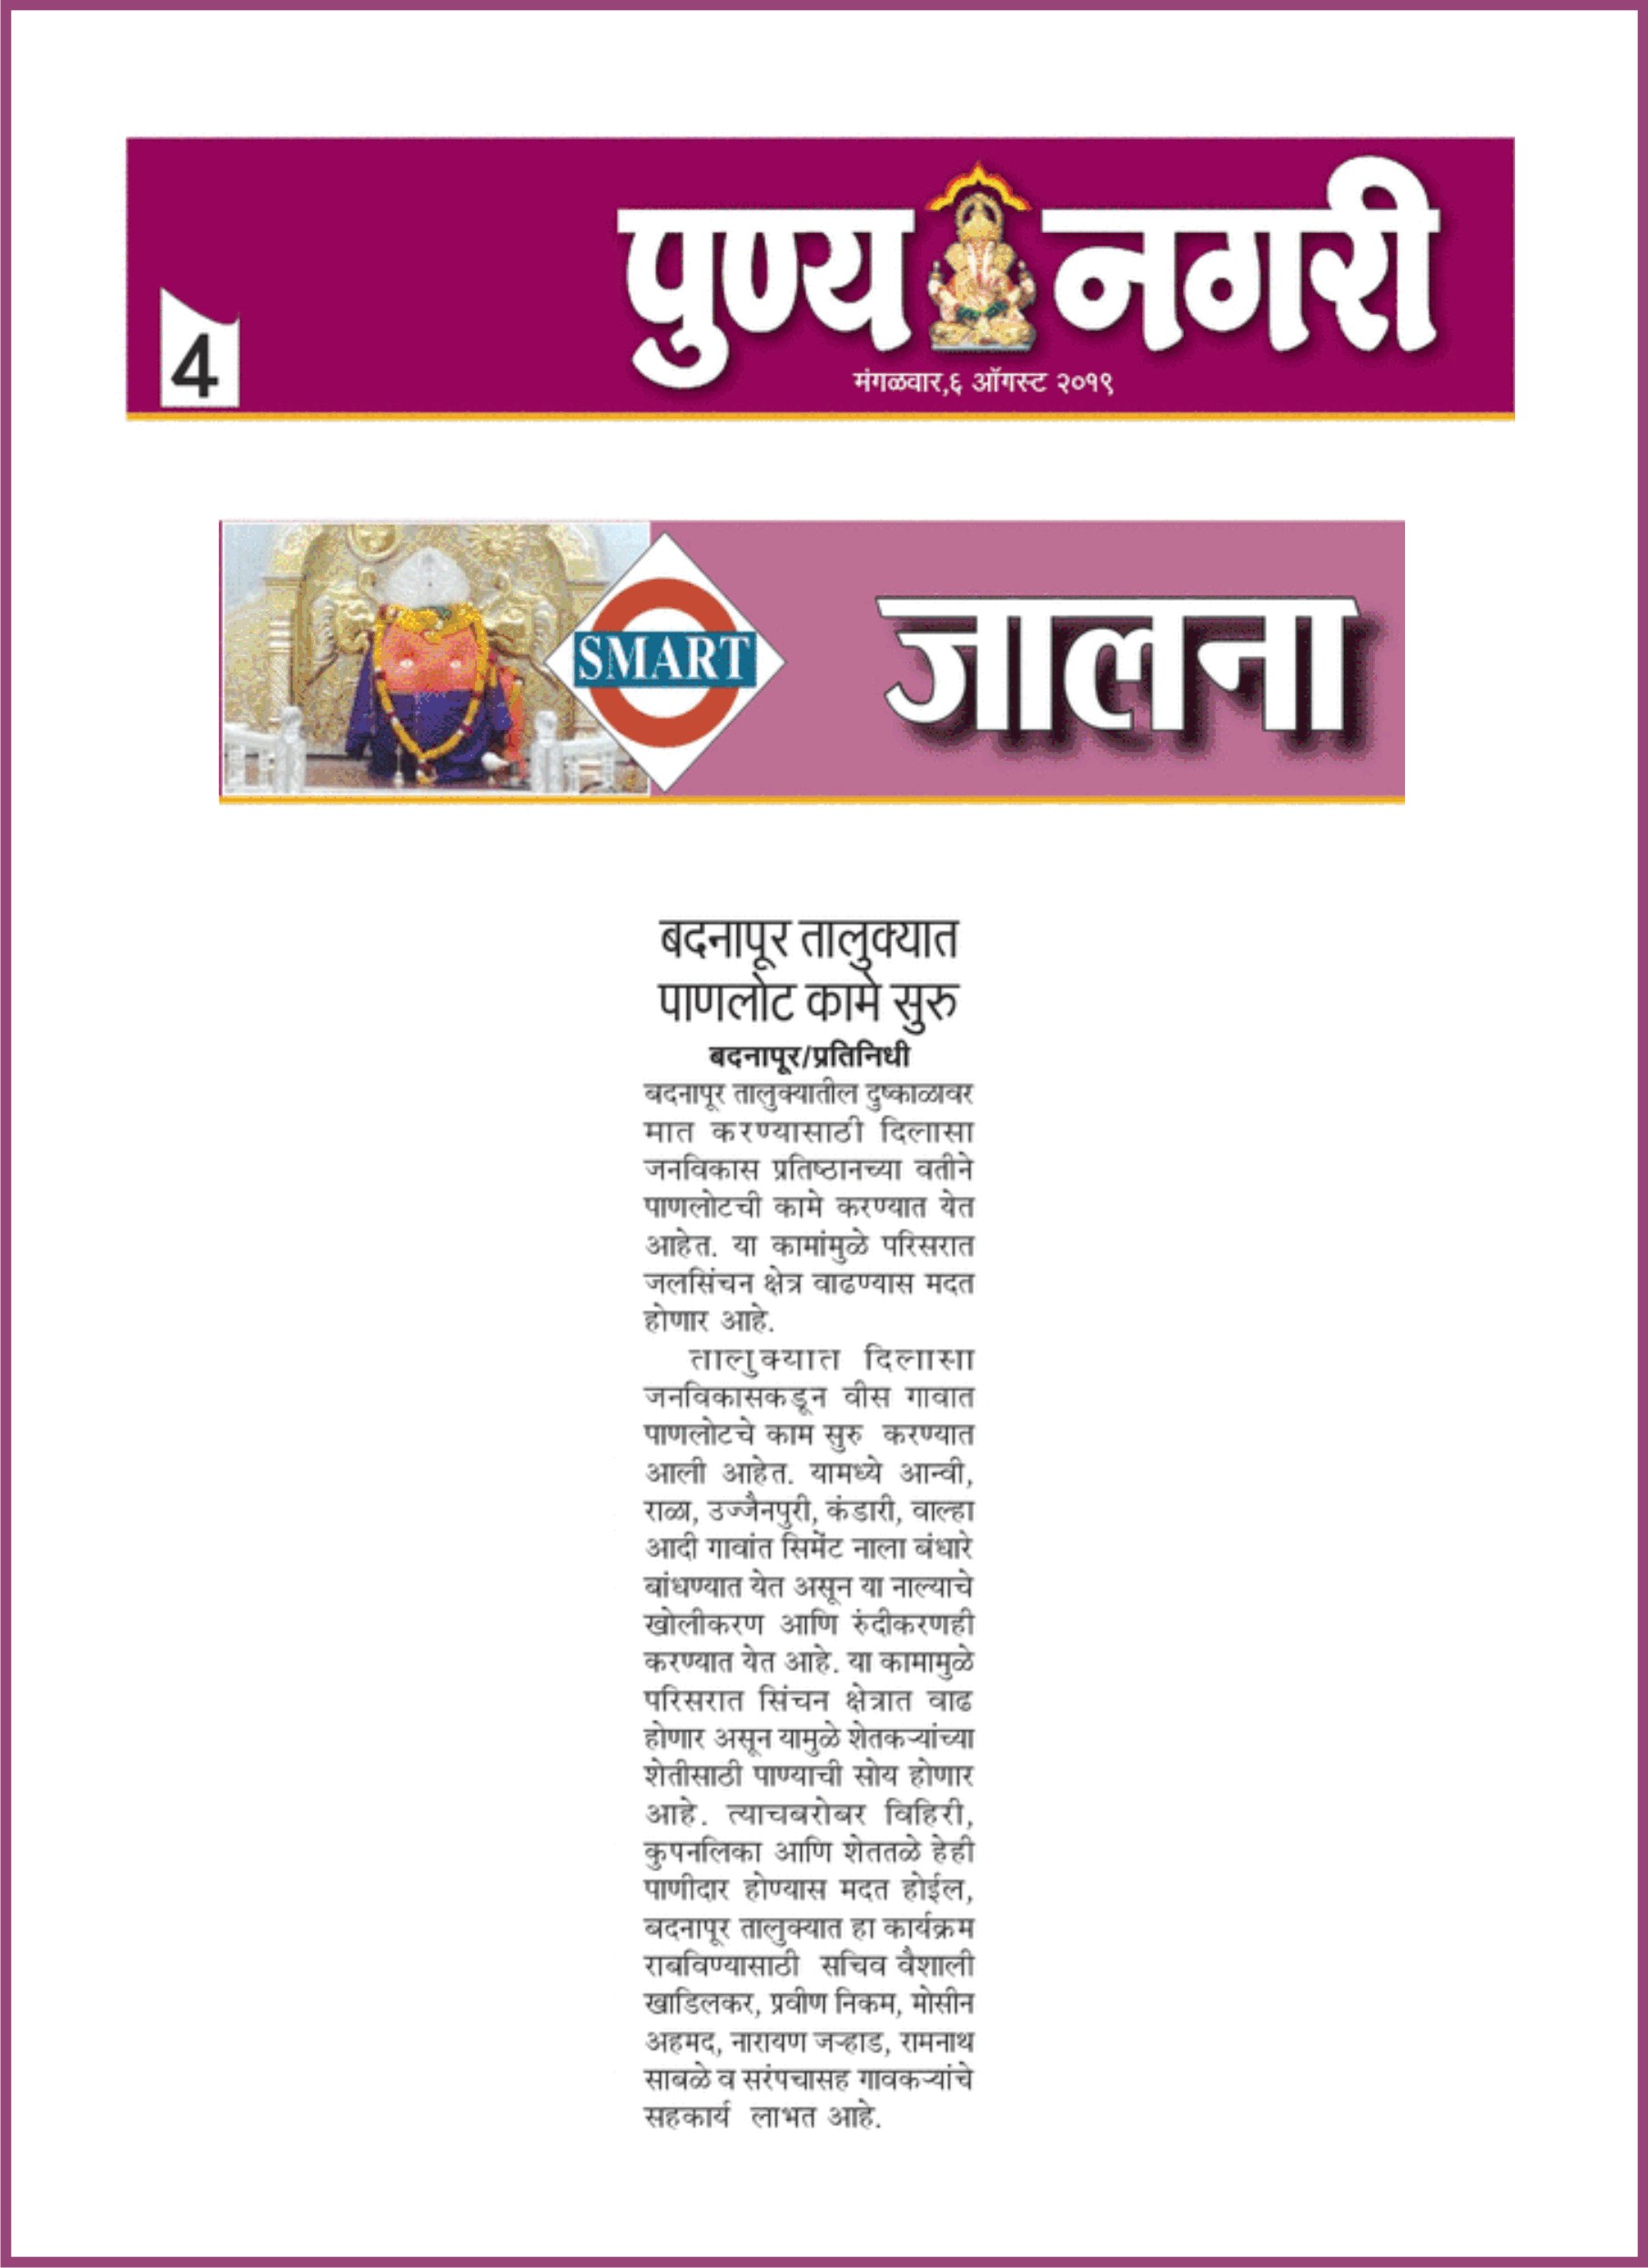 Badnapur - Punyanagari news - 06.08.19.JPG